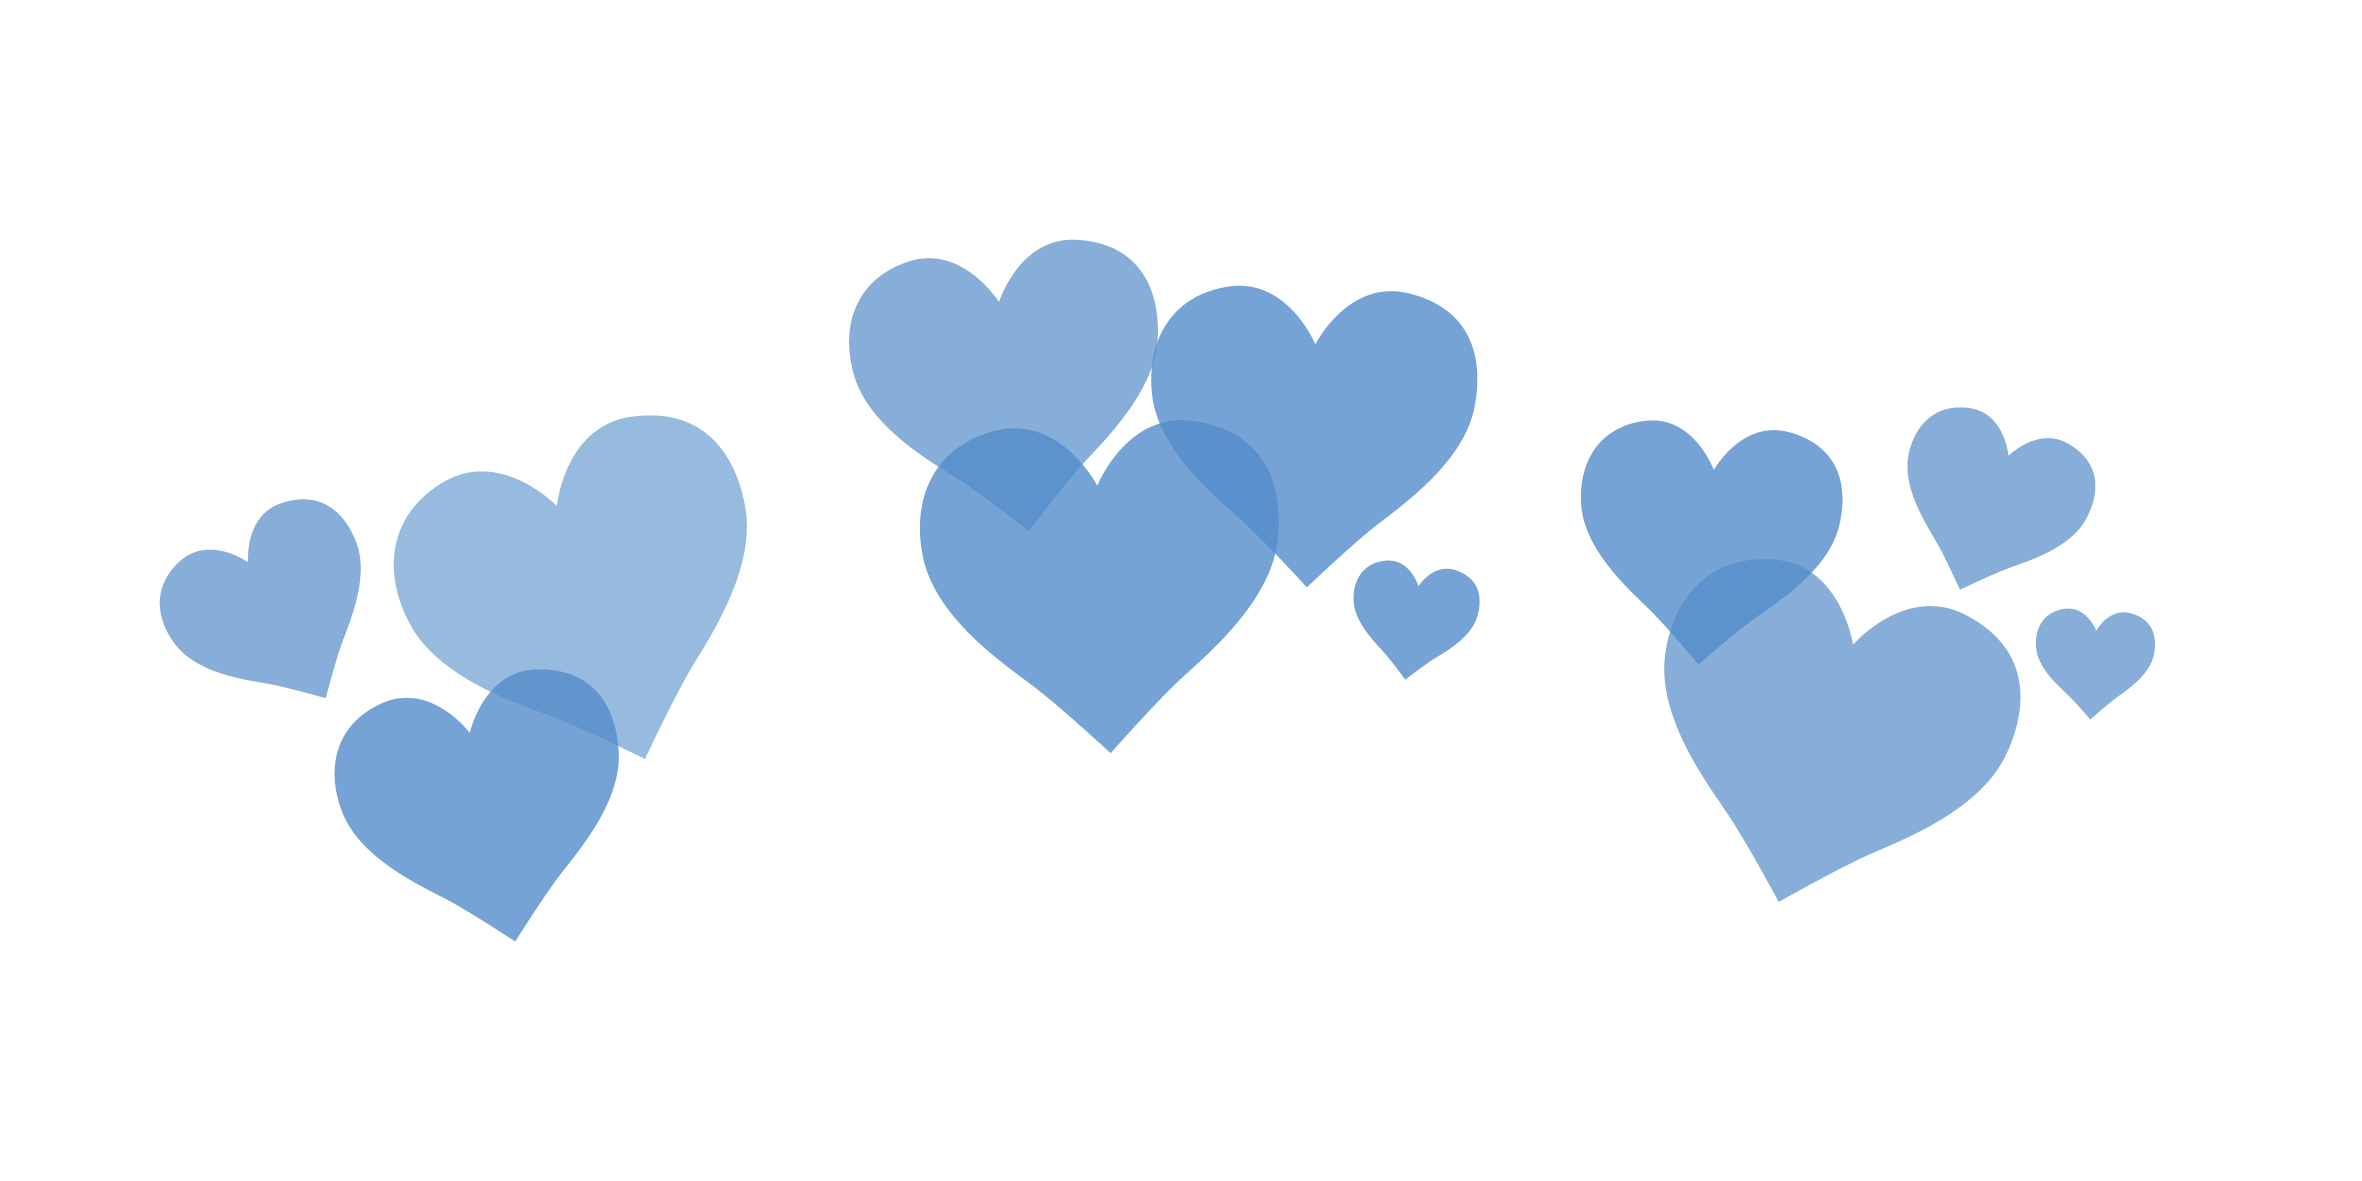 Надписи над головой. Сердечки на прозрачном фоне. Голубое сердечко. Синее сердечко. Сердечки на белом фоне.